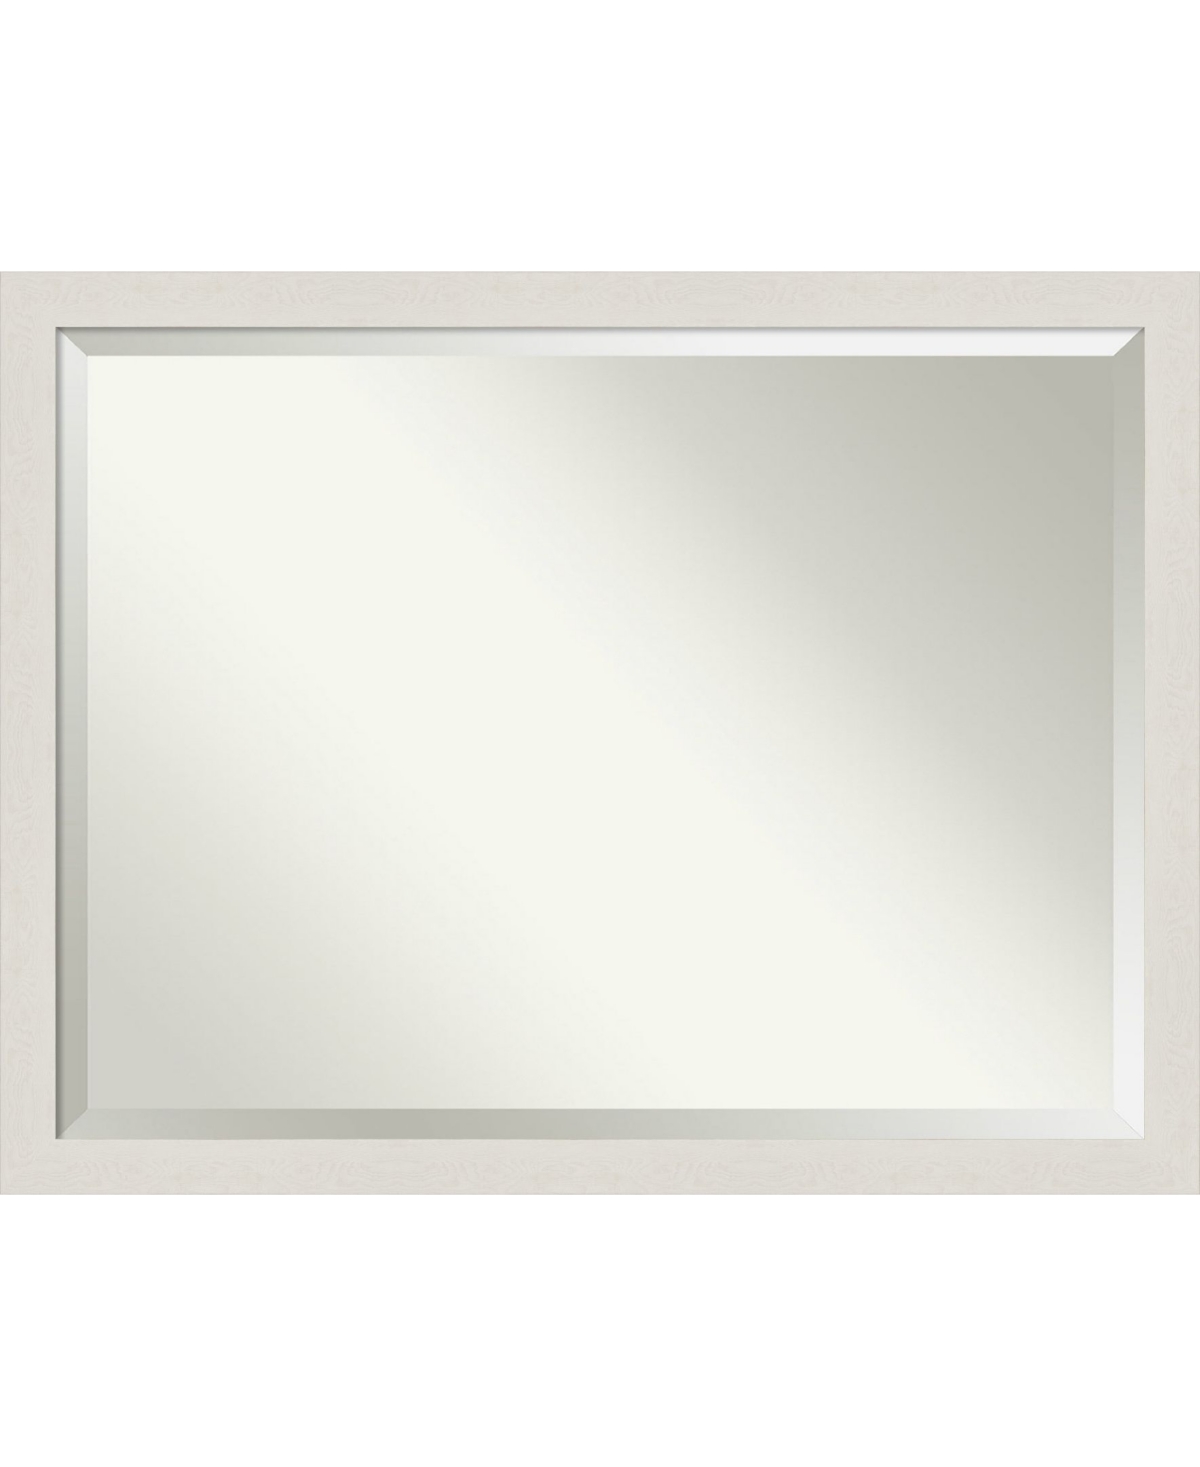 Rustic Plank Framed Bathroom Vanity Wall Mirror, 43.38" x 33.38" - White